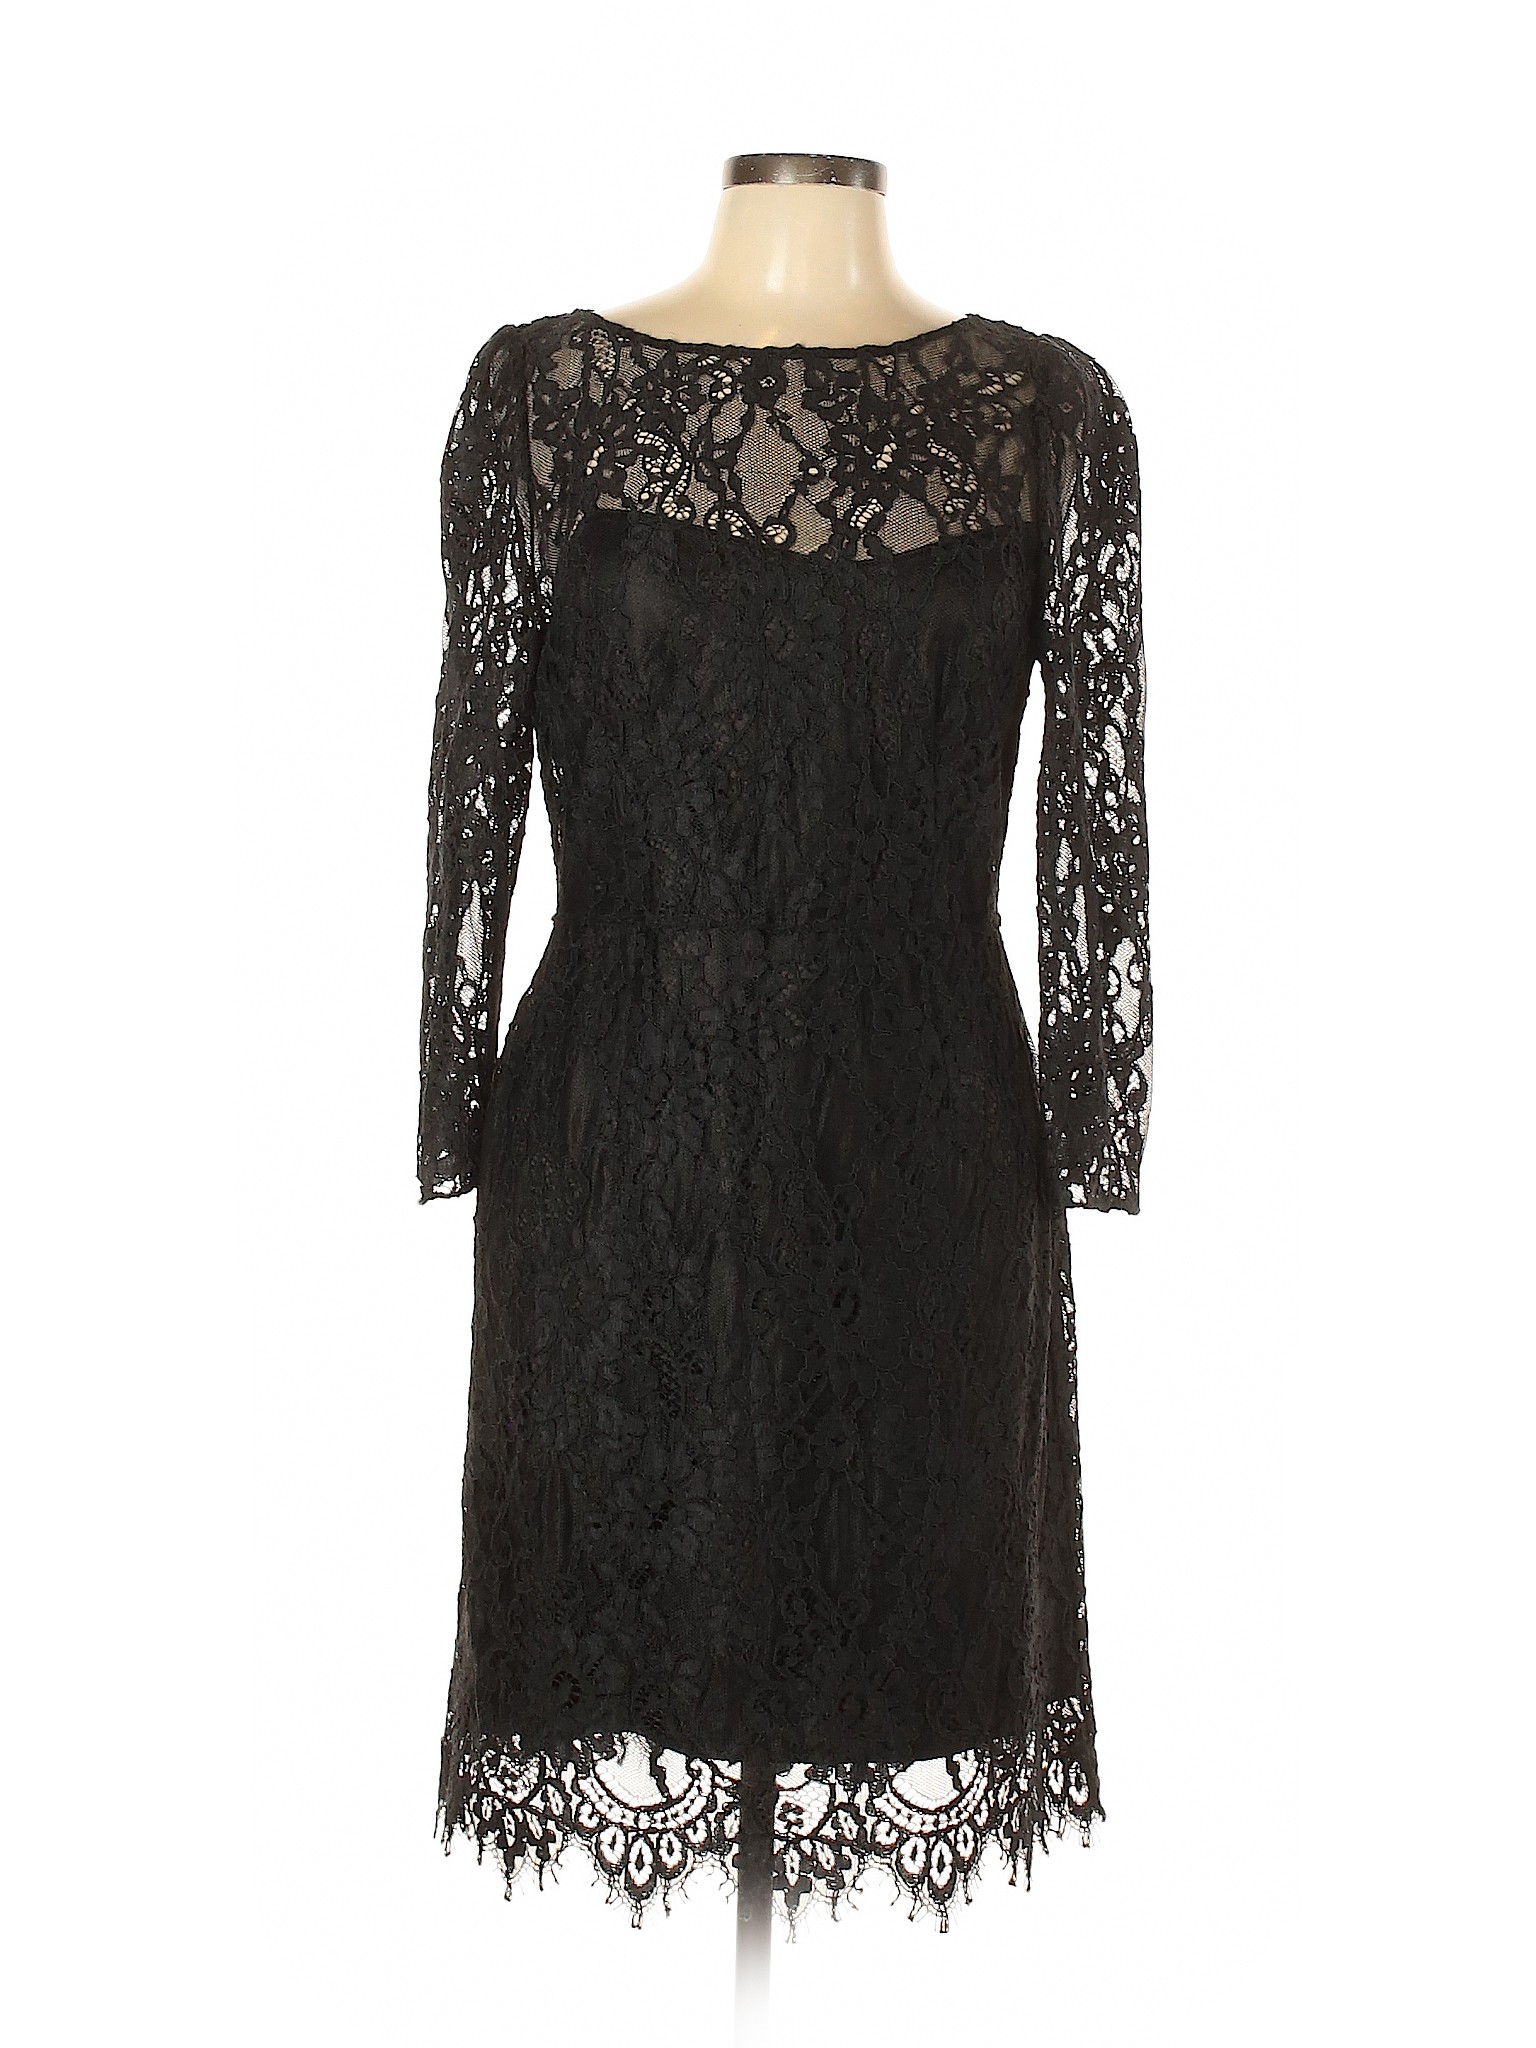 Elie Tahari Black Cocktail Dress Size 12 - 91% off | thredUP